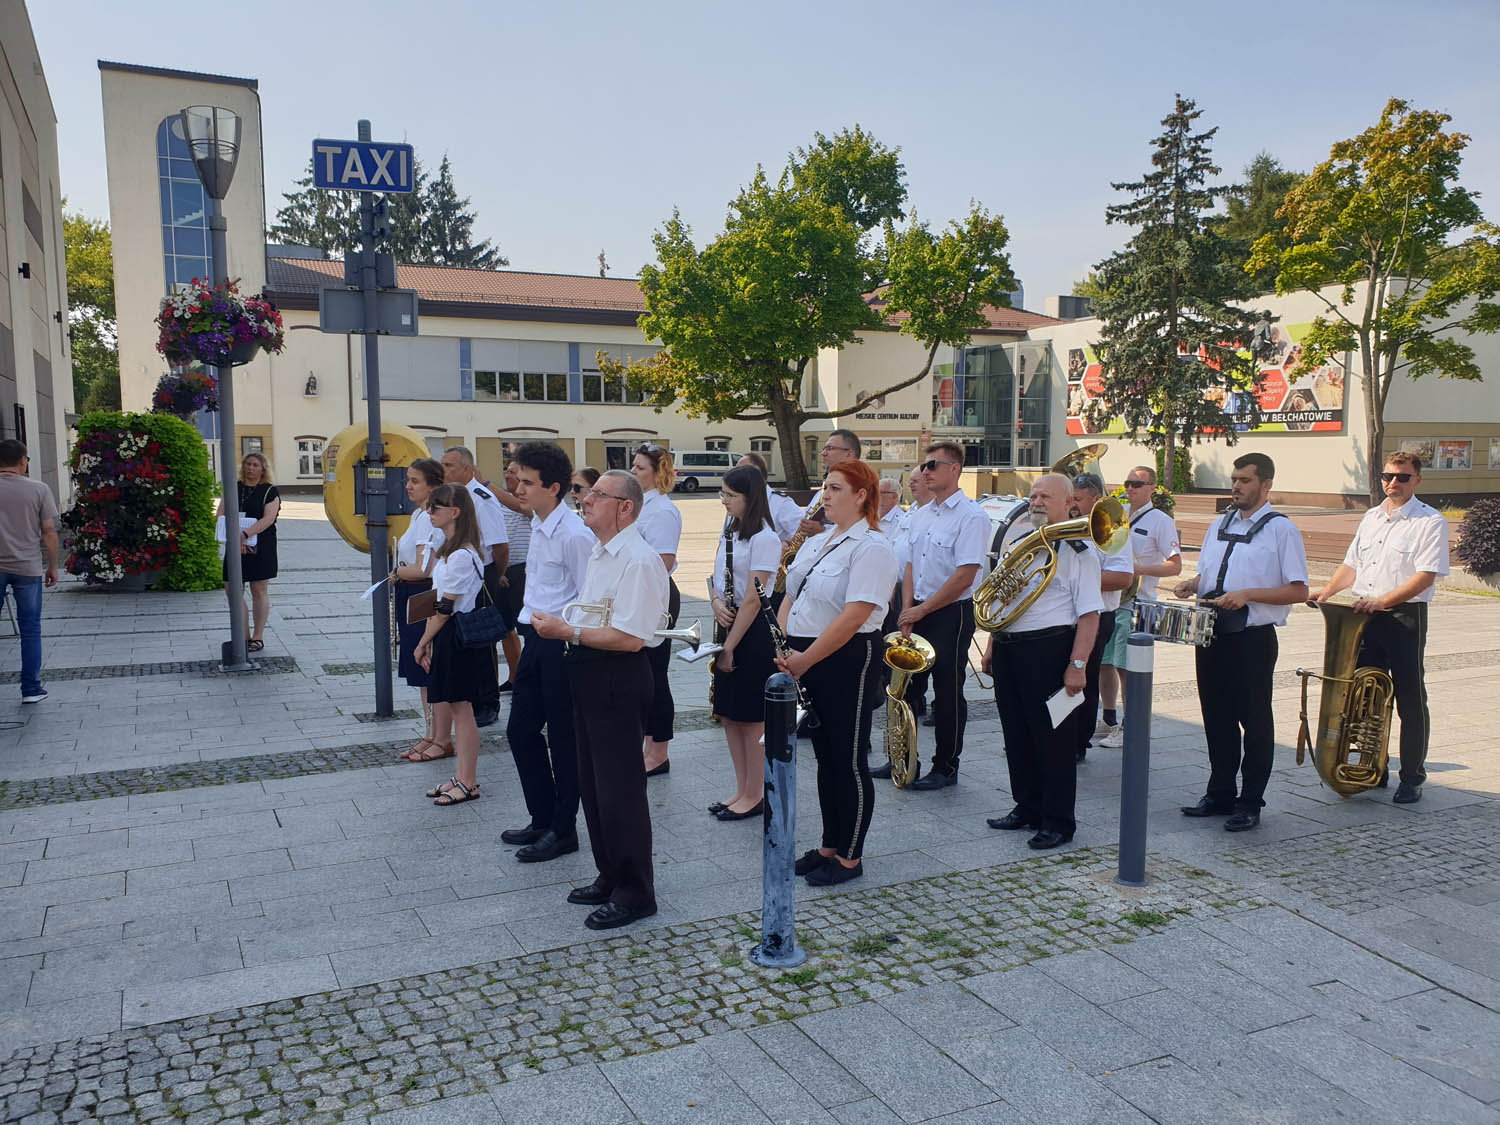 Commemoration event at Narutowicza Square